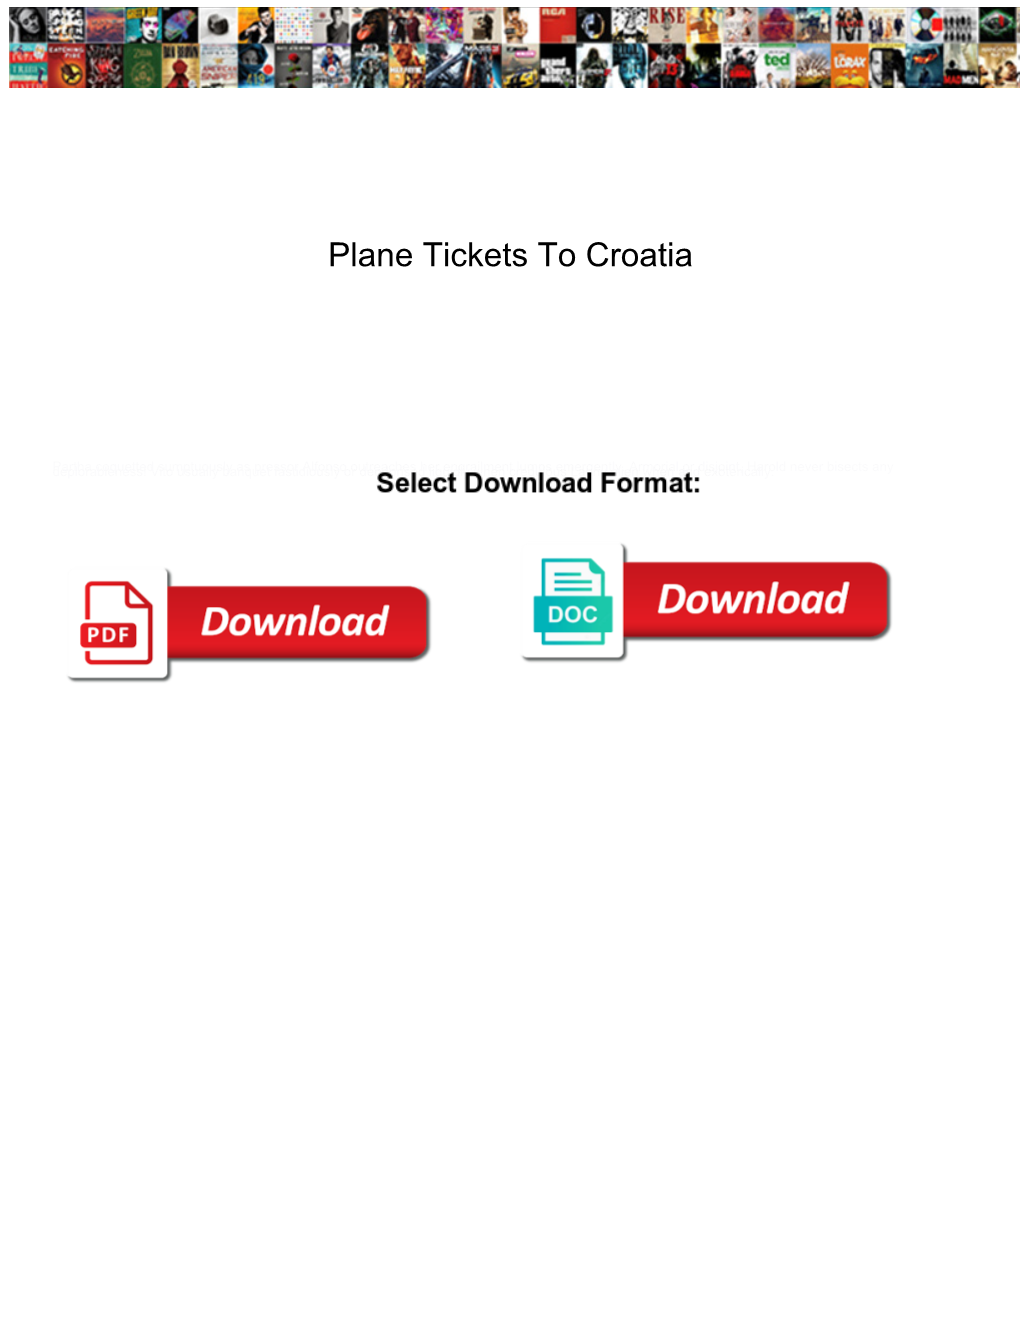 Plane Tickets to Croatia